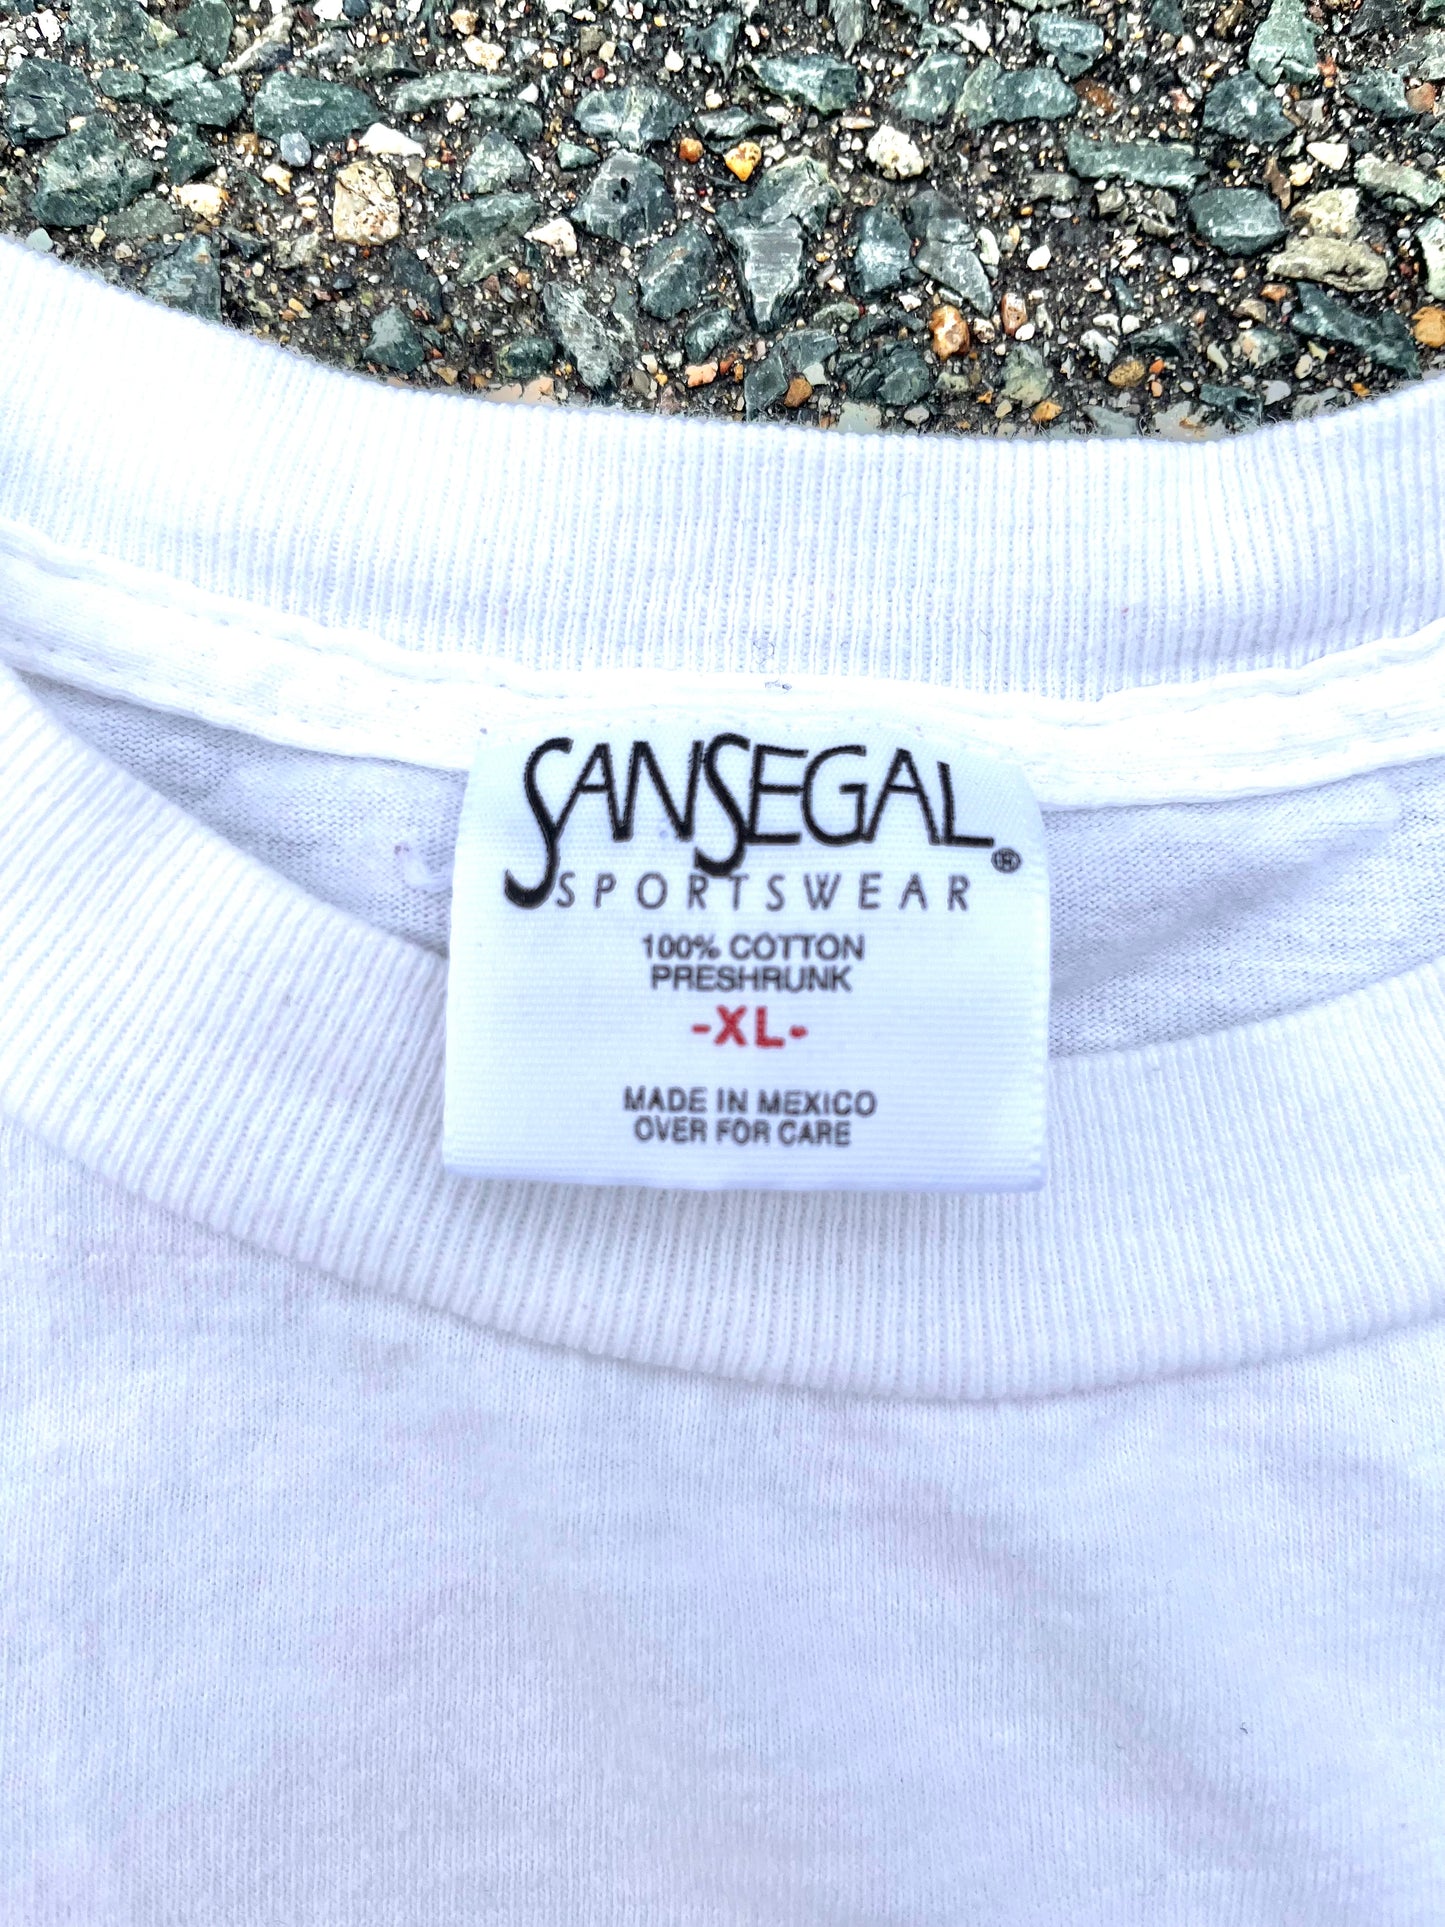 Vintage San Segal Out of Africa Wildlife Park 1995 Jungle Animal Retro T Shirt Size XL